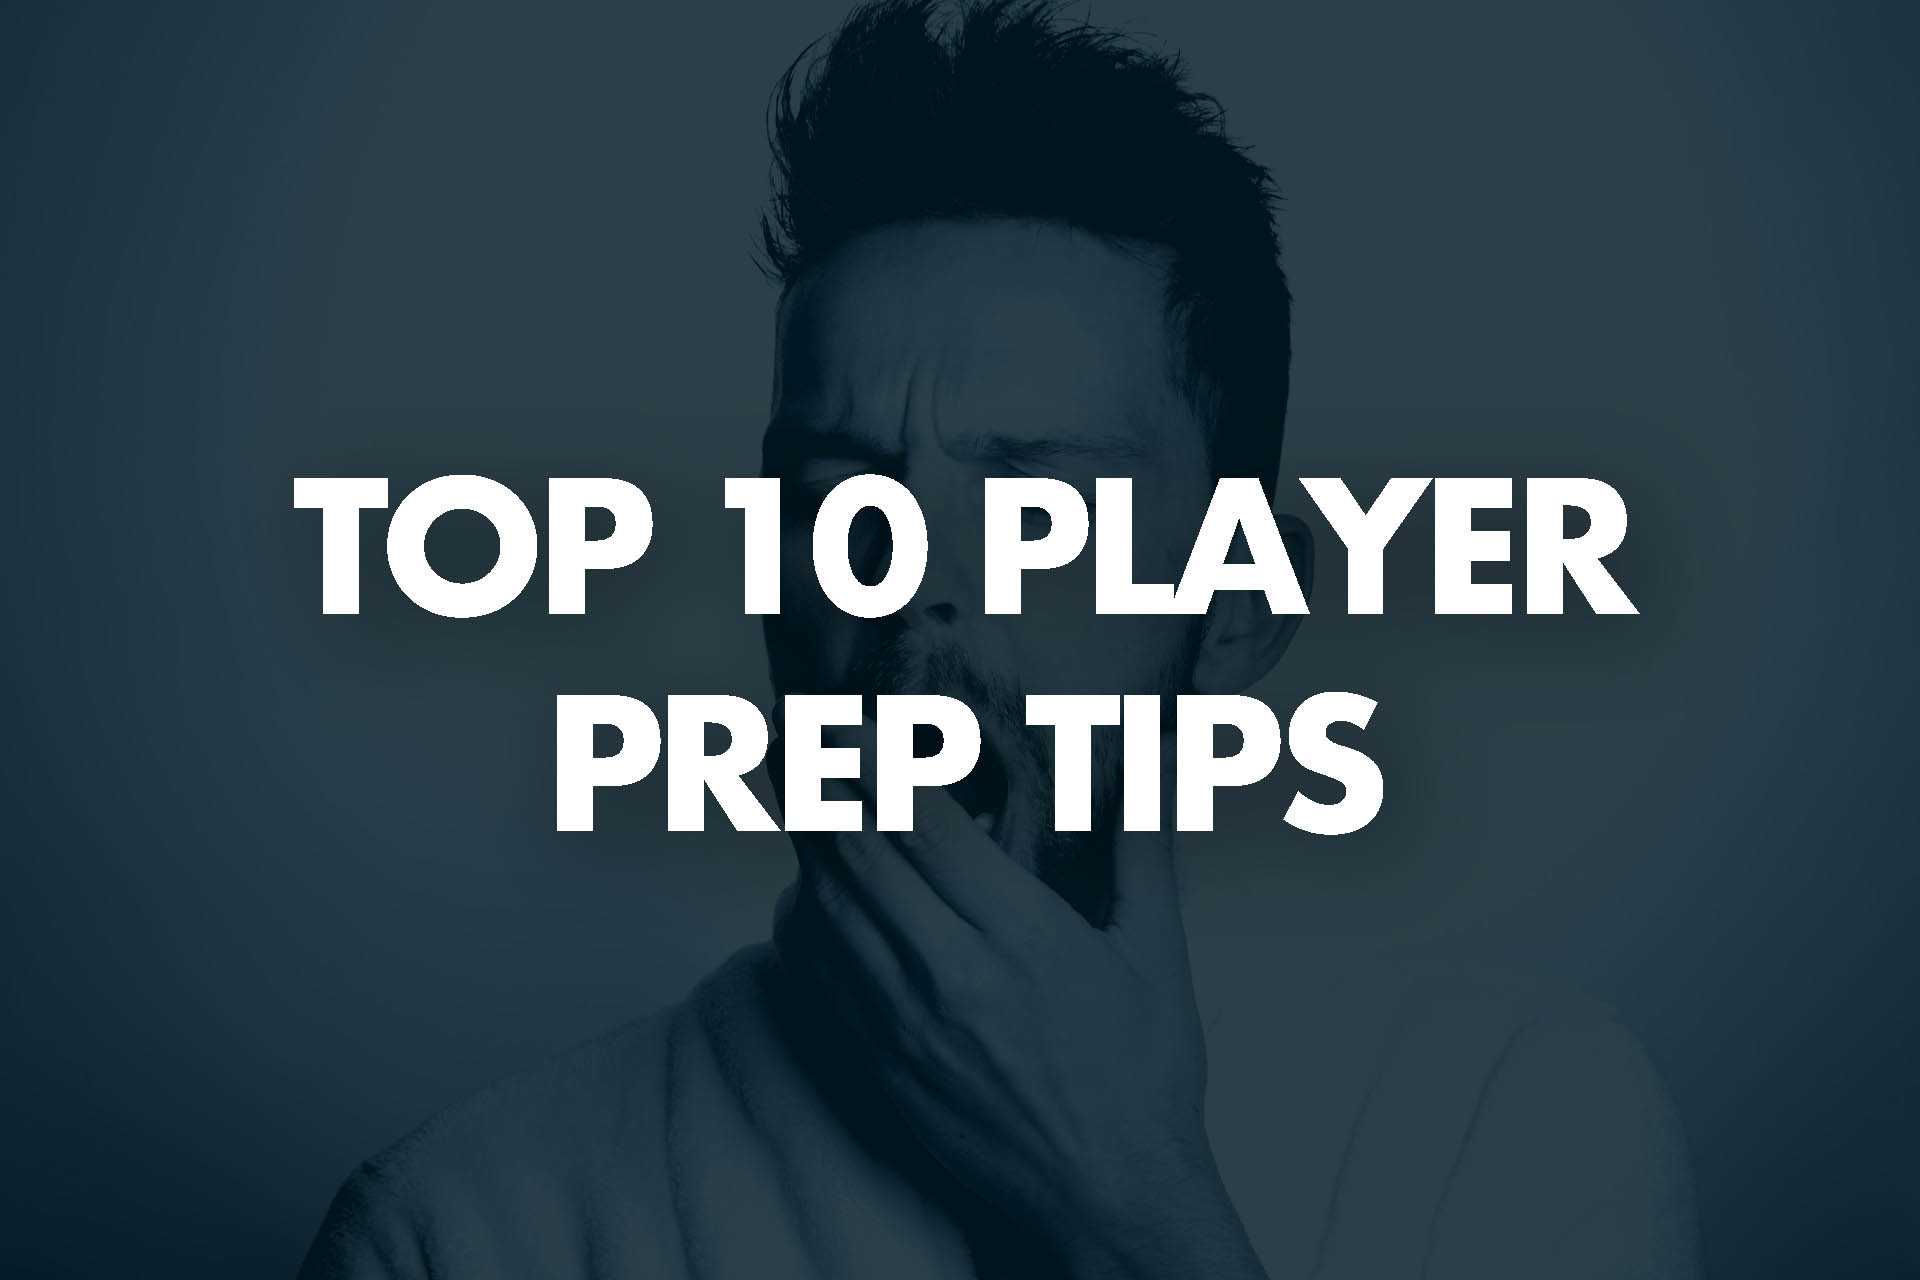 Top 10 Player Prep Tips